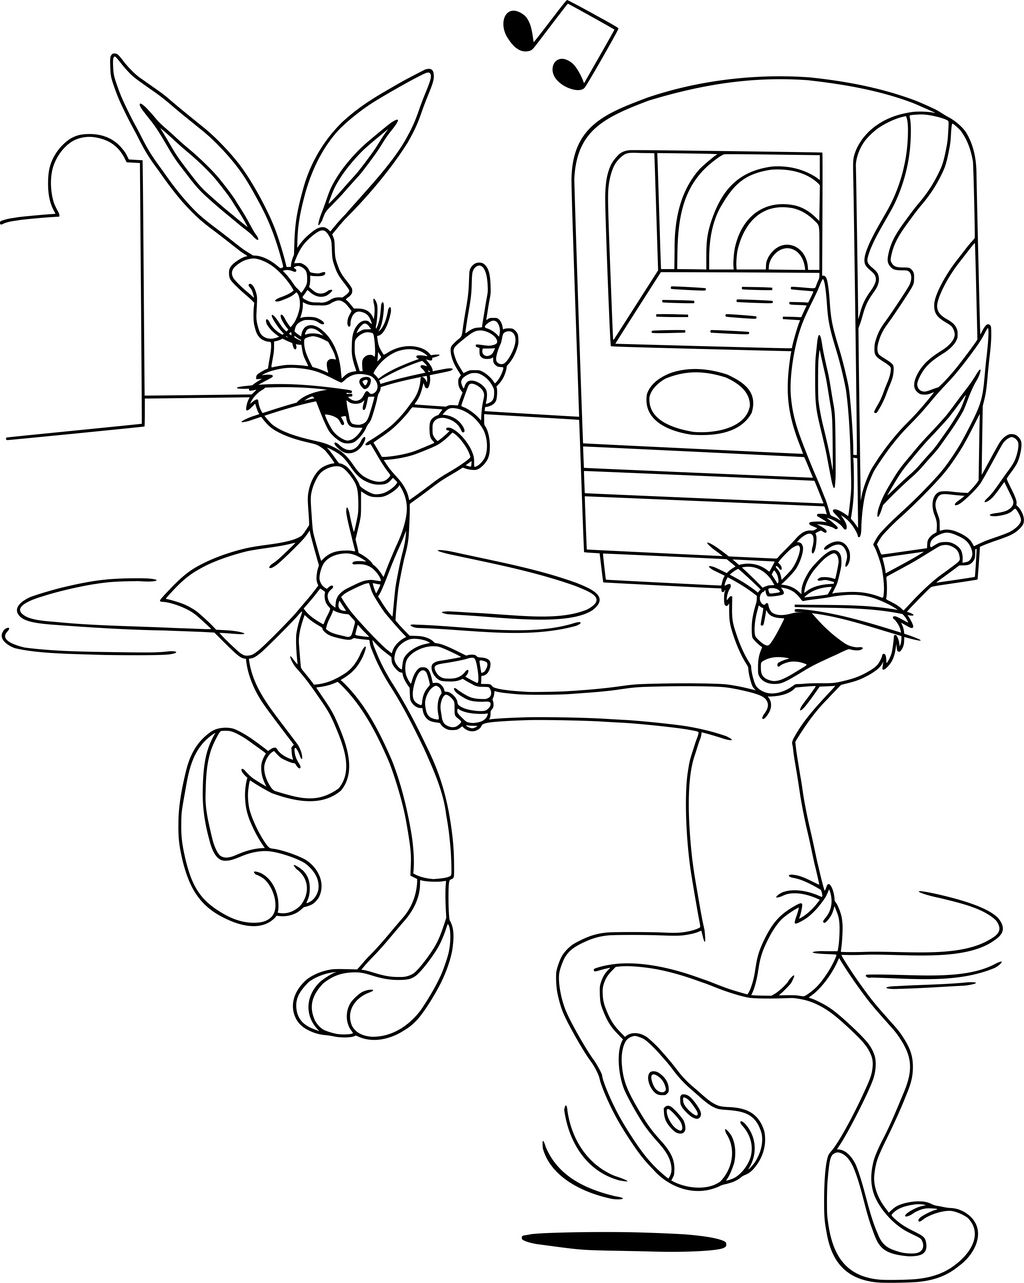 Bugs Bunny and Honey Bunny dancing by HoneyBunnyWB on DeviantArt